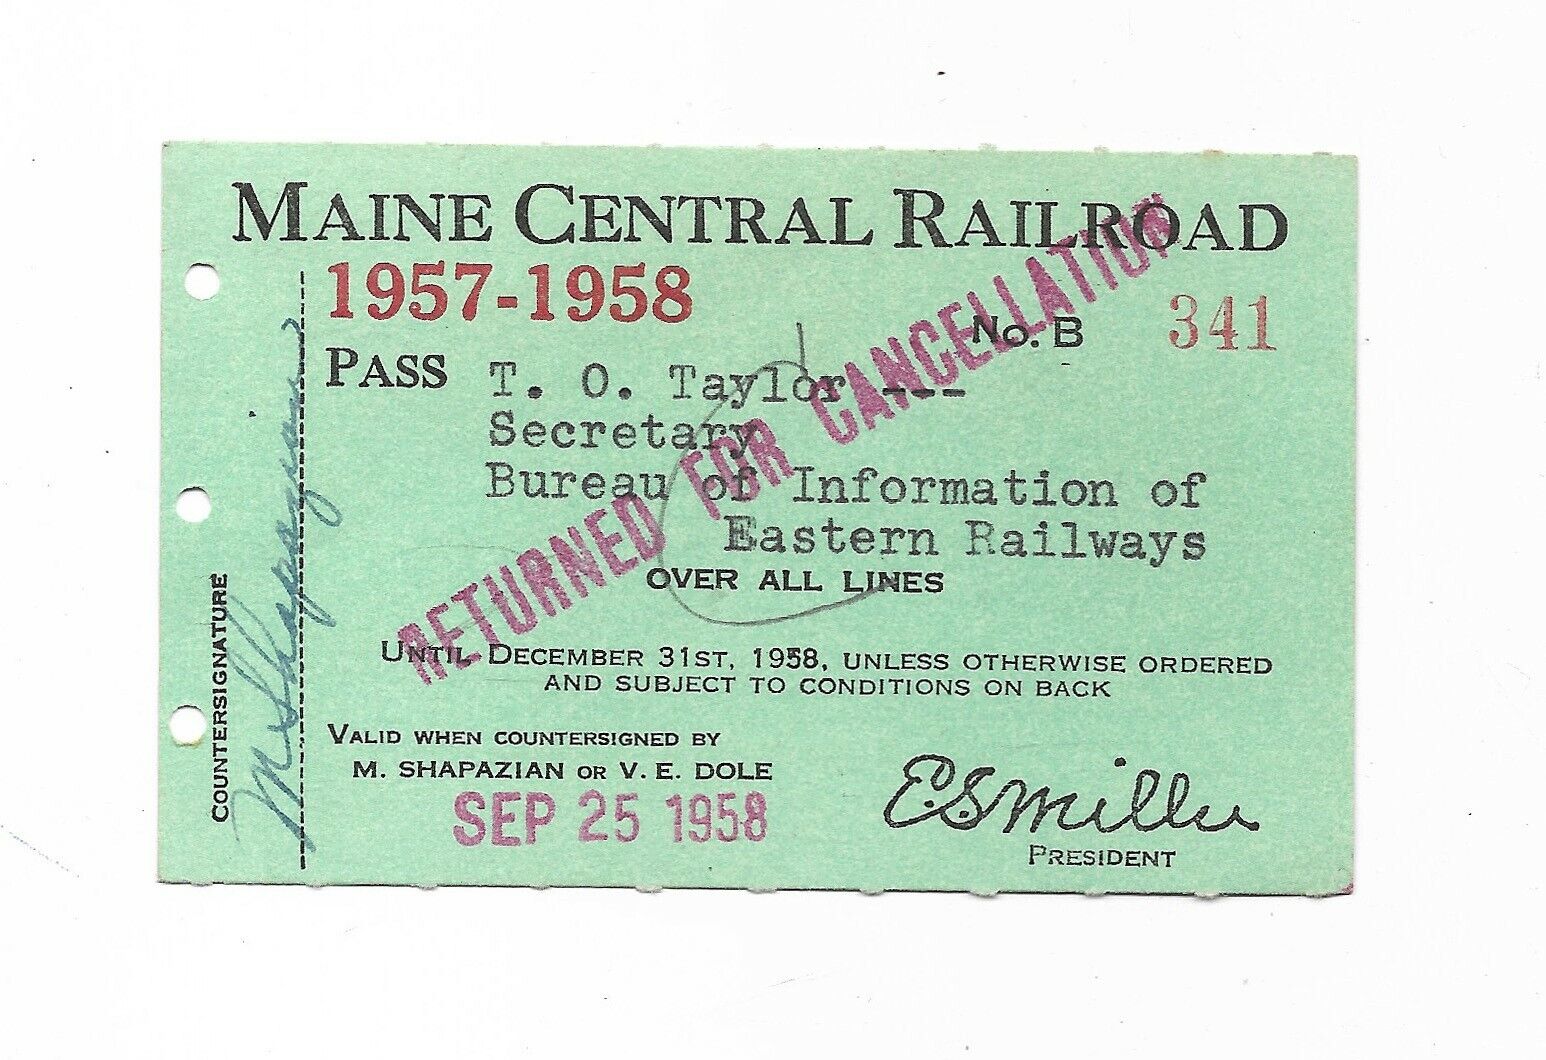 Maine Central Railroad Pass/Ticket 1957-1958 No. B 341 T O Taylor, Secretary